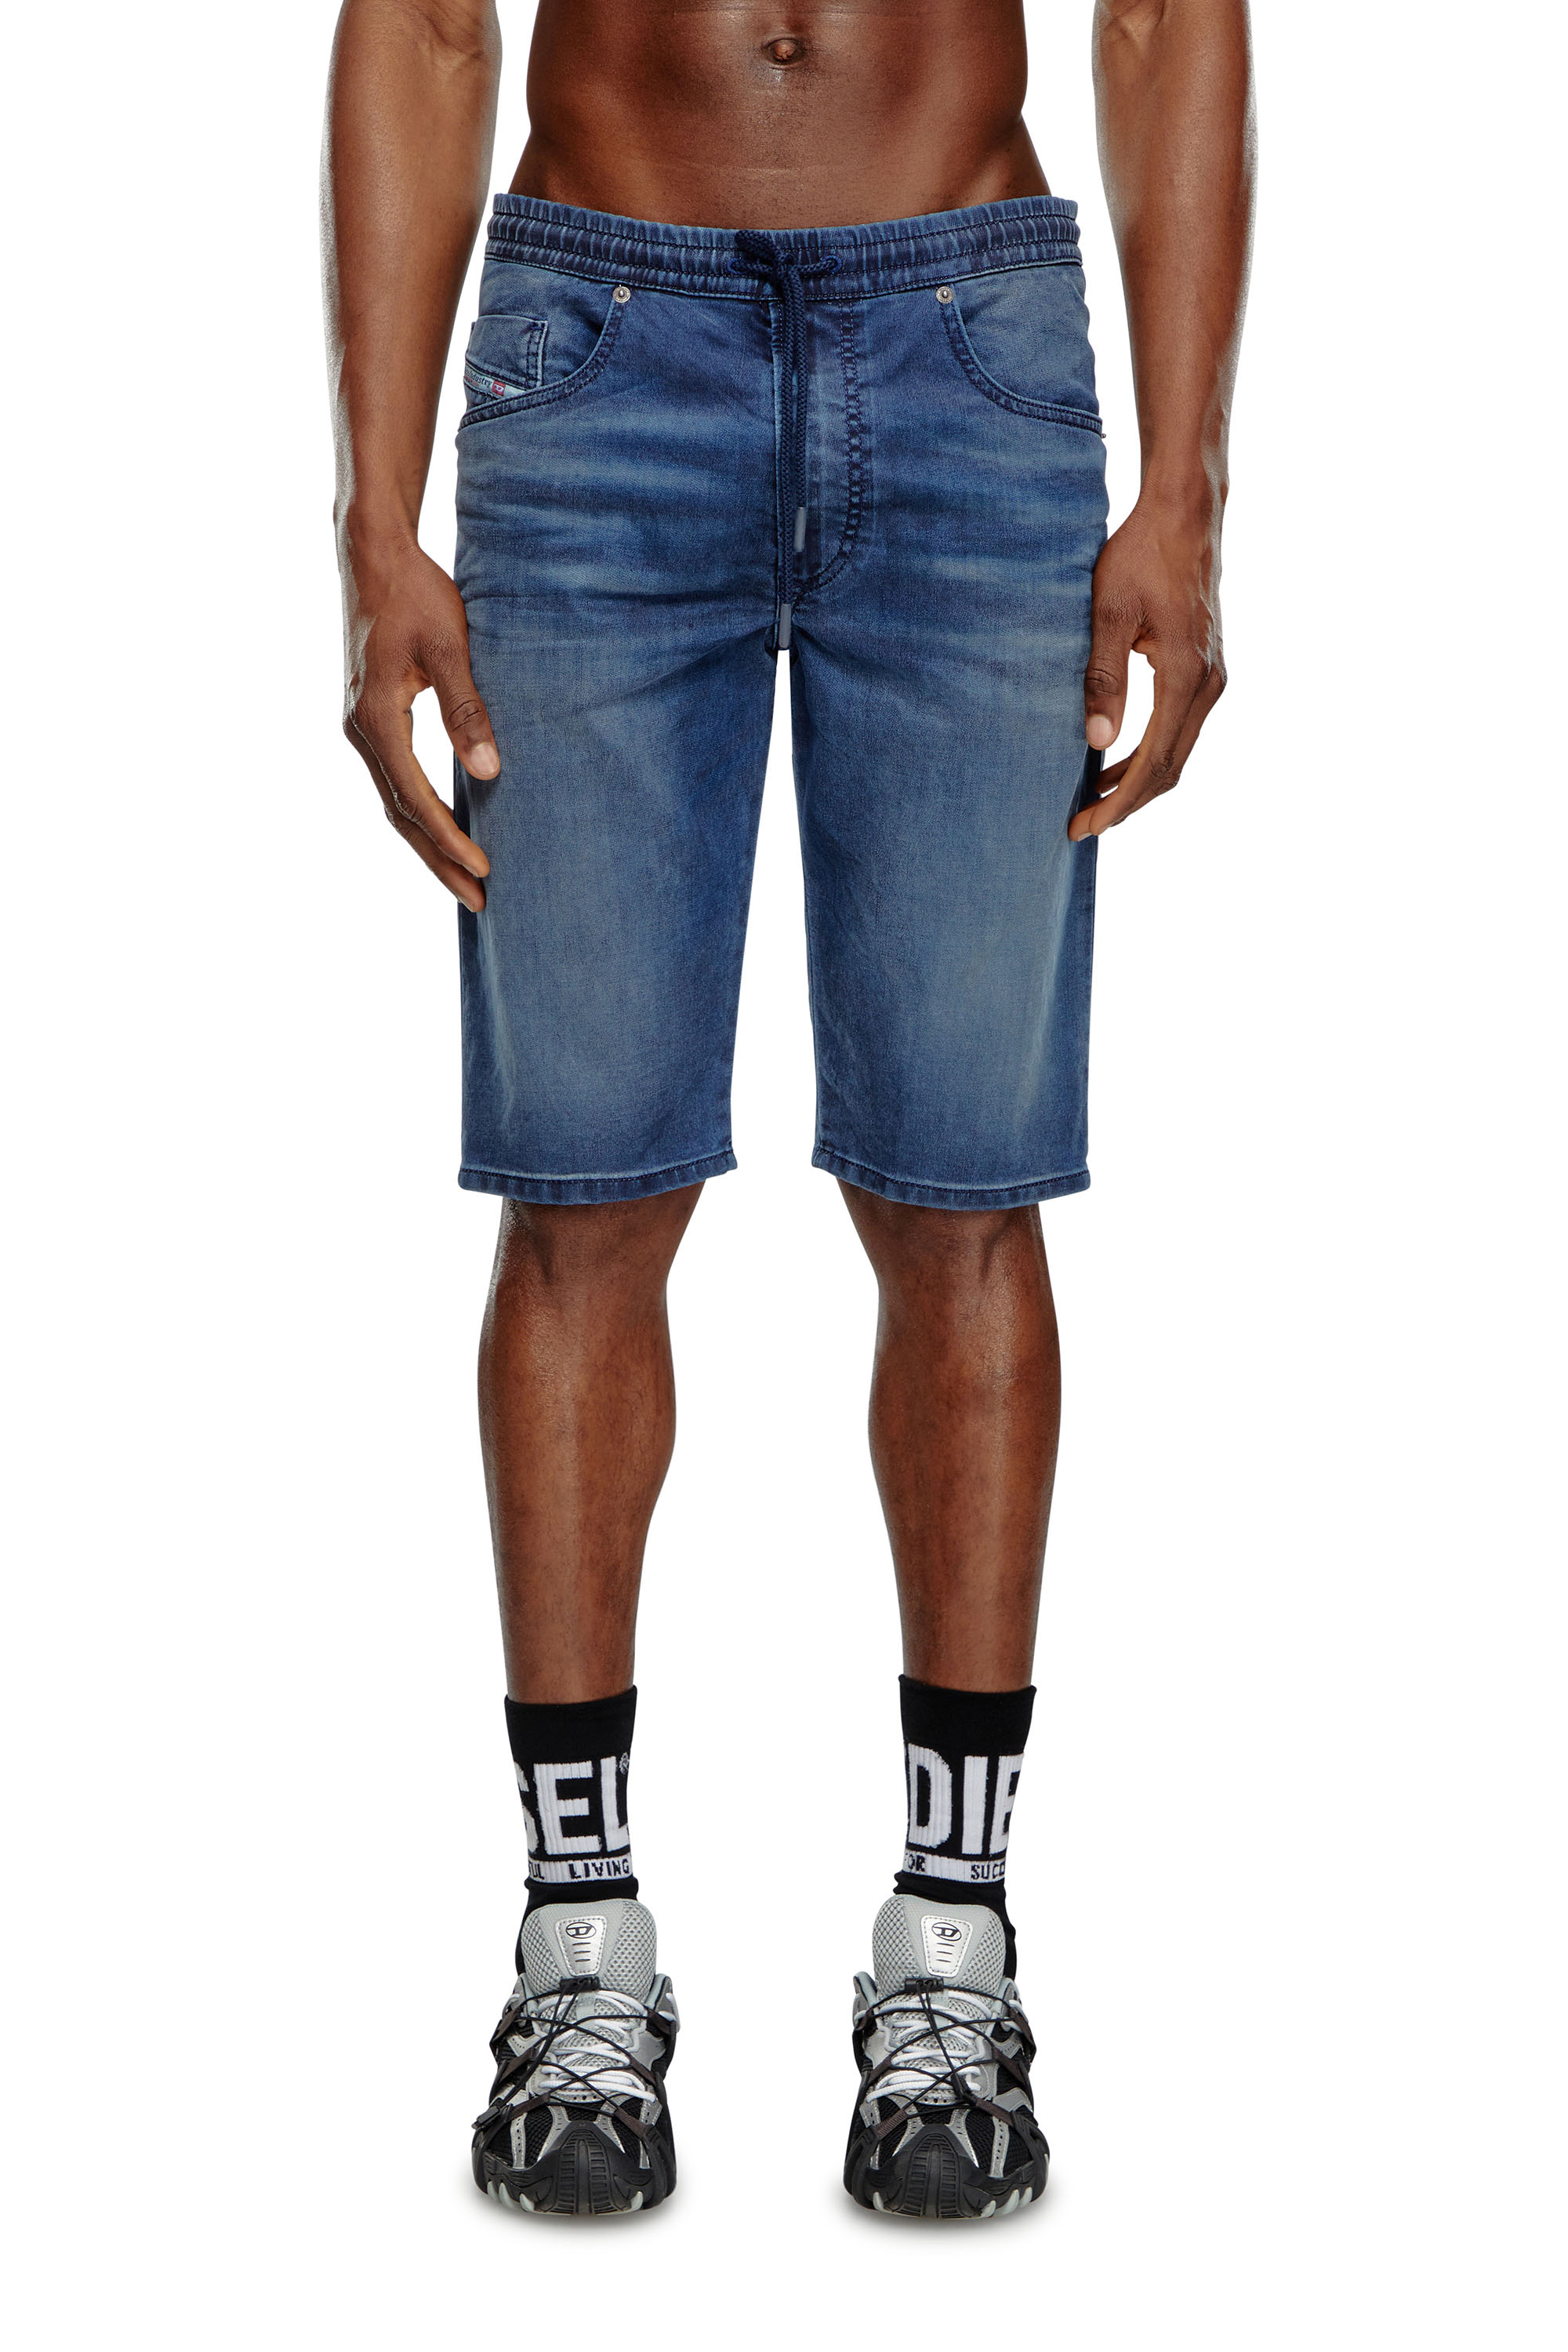 Diesel - Pantalones cortos chinos en Jogg Jeans - Shorts - Hombre - Azul marino